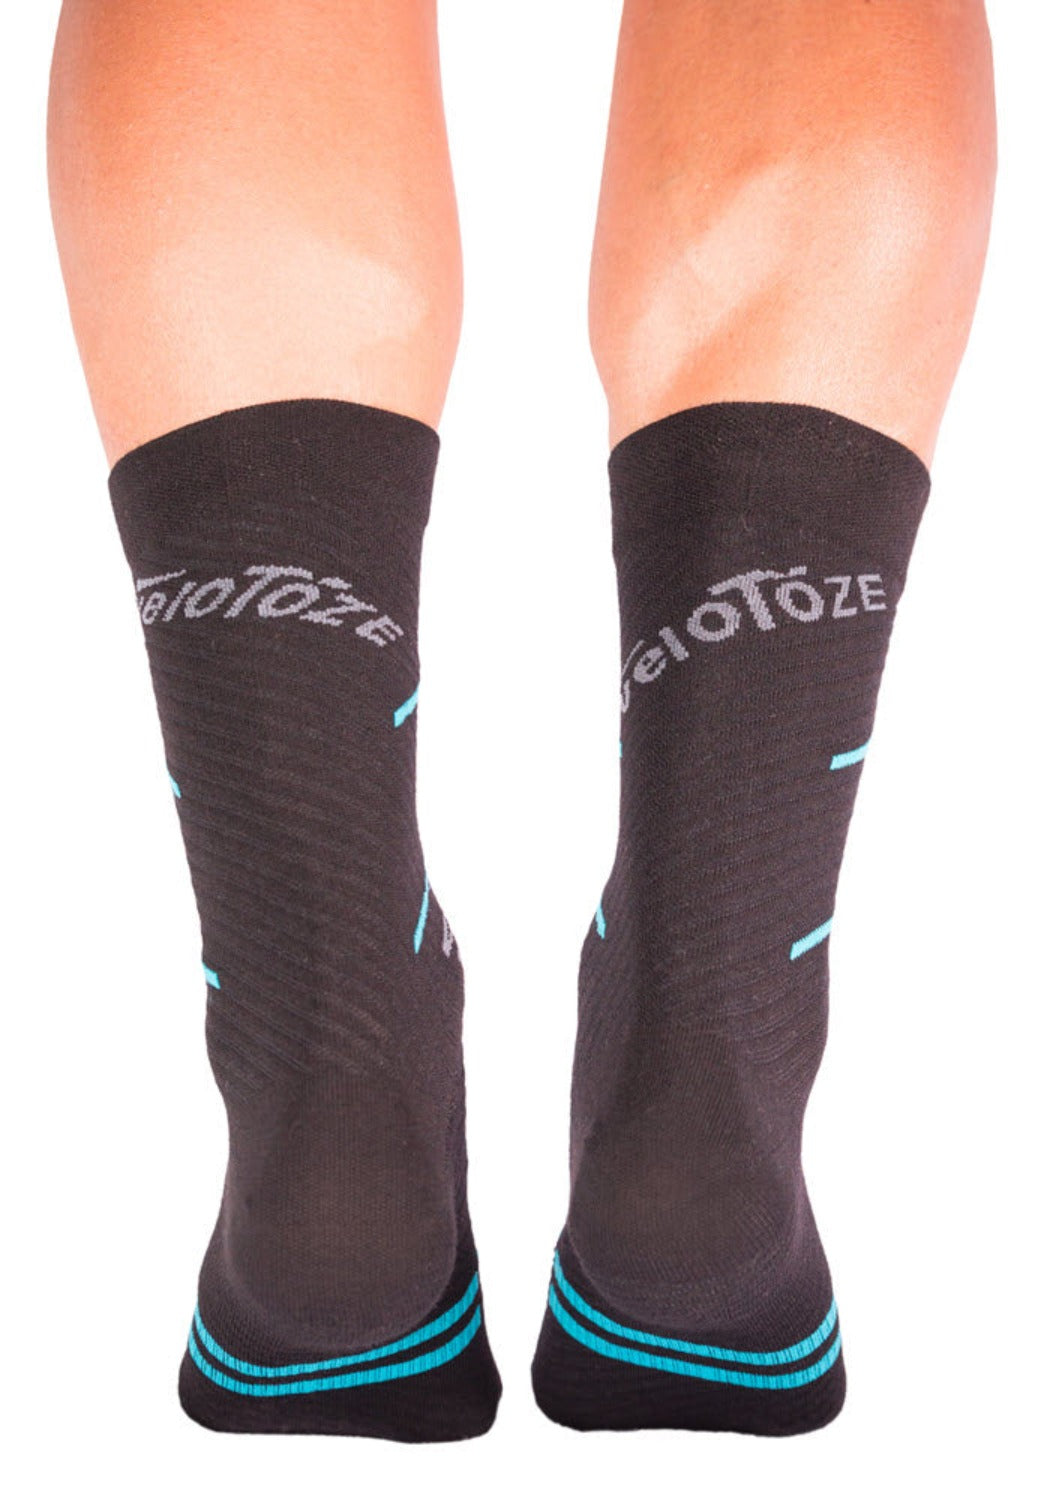 VeloToze Active Compression Wool Socks, Black/Yellow - LG/XL